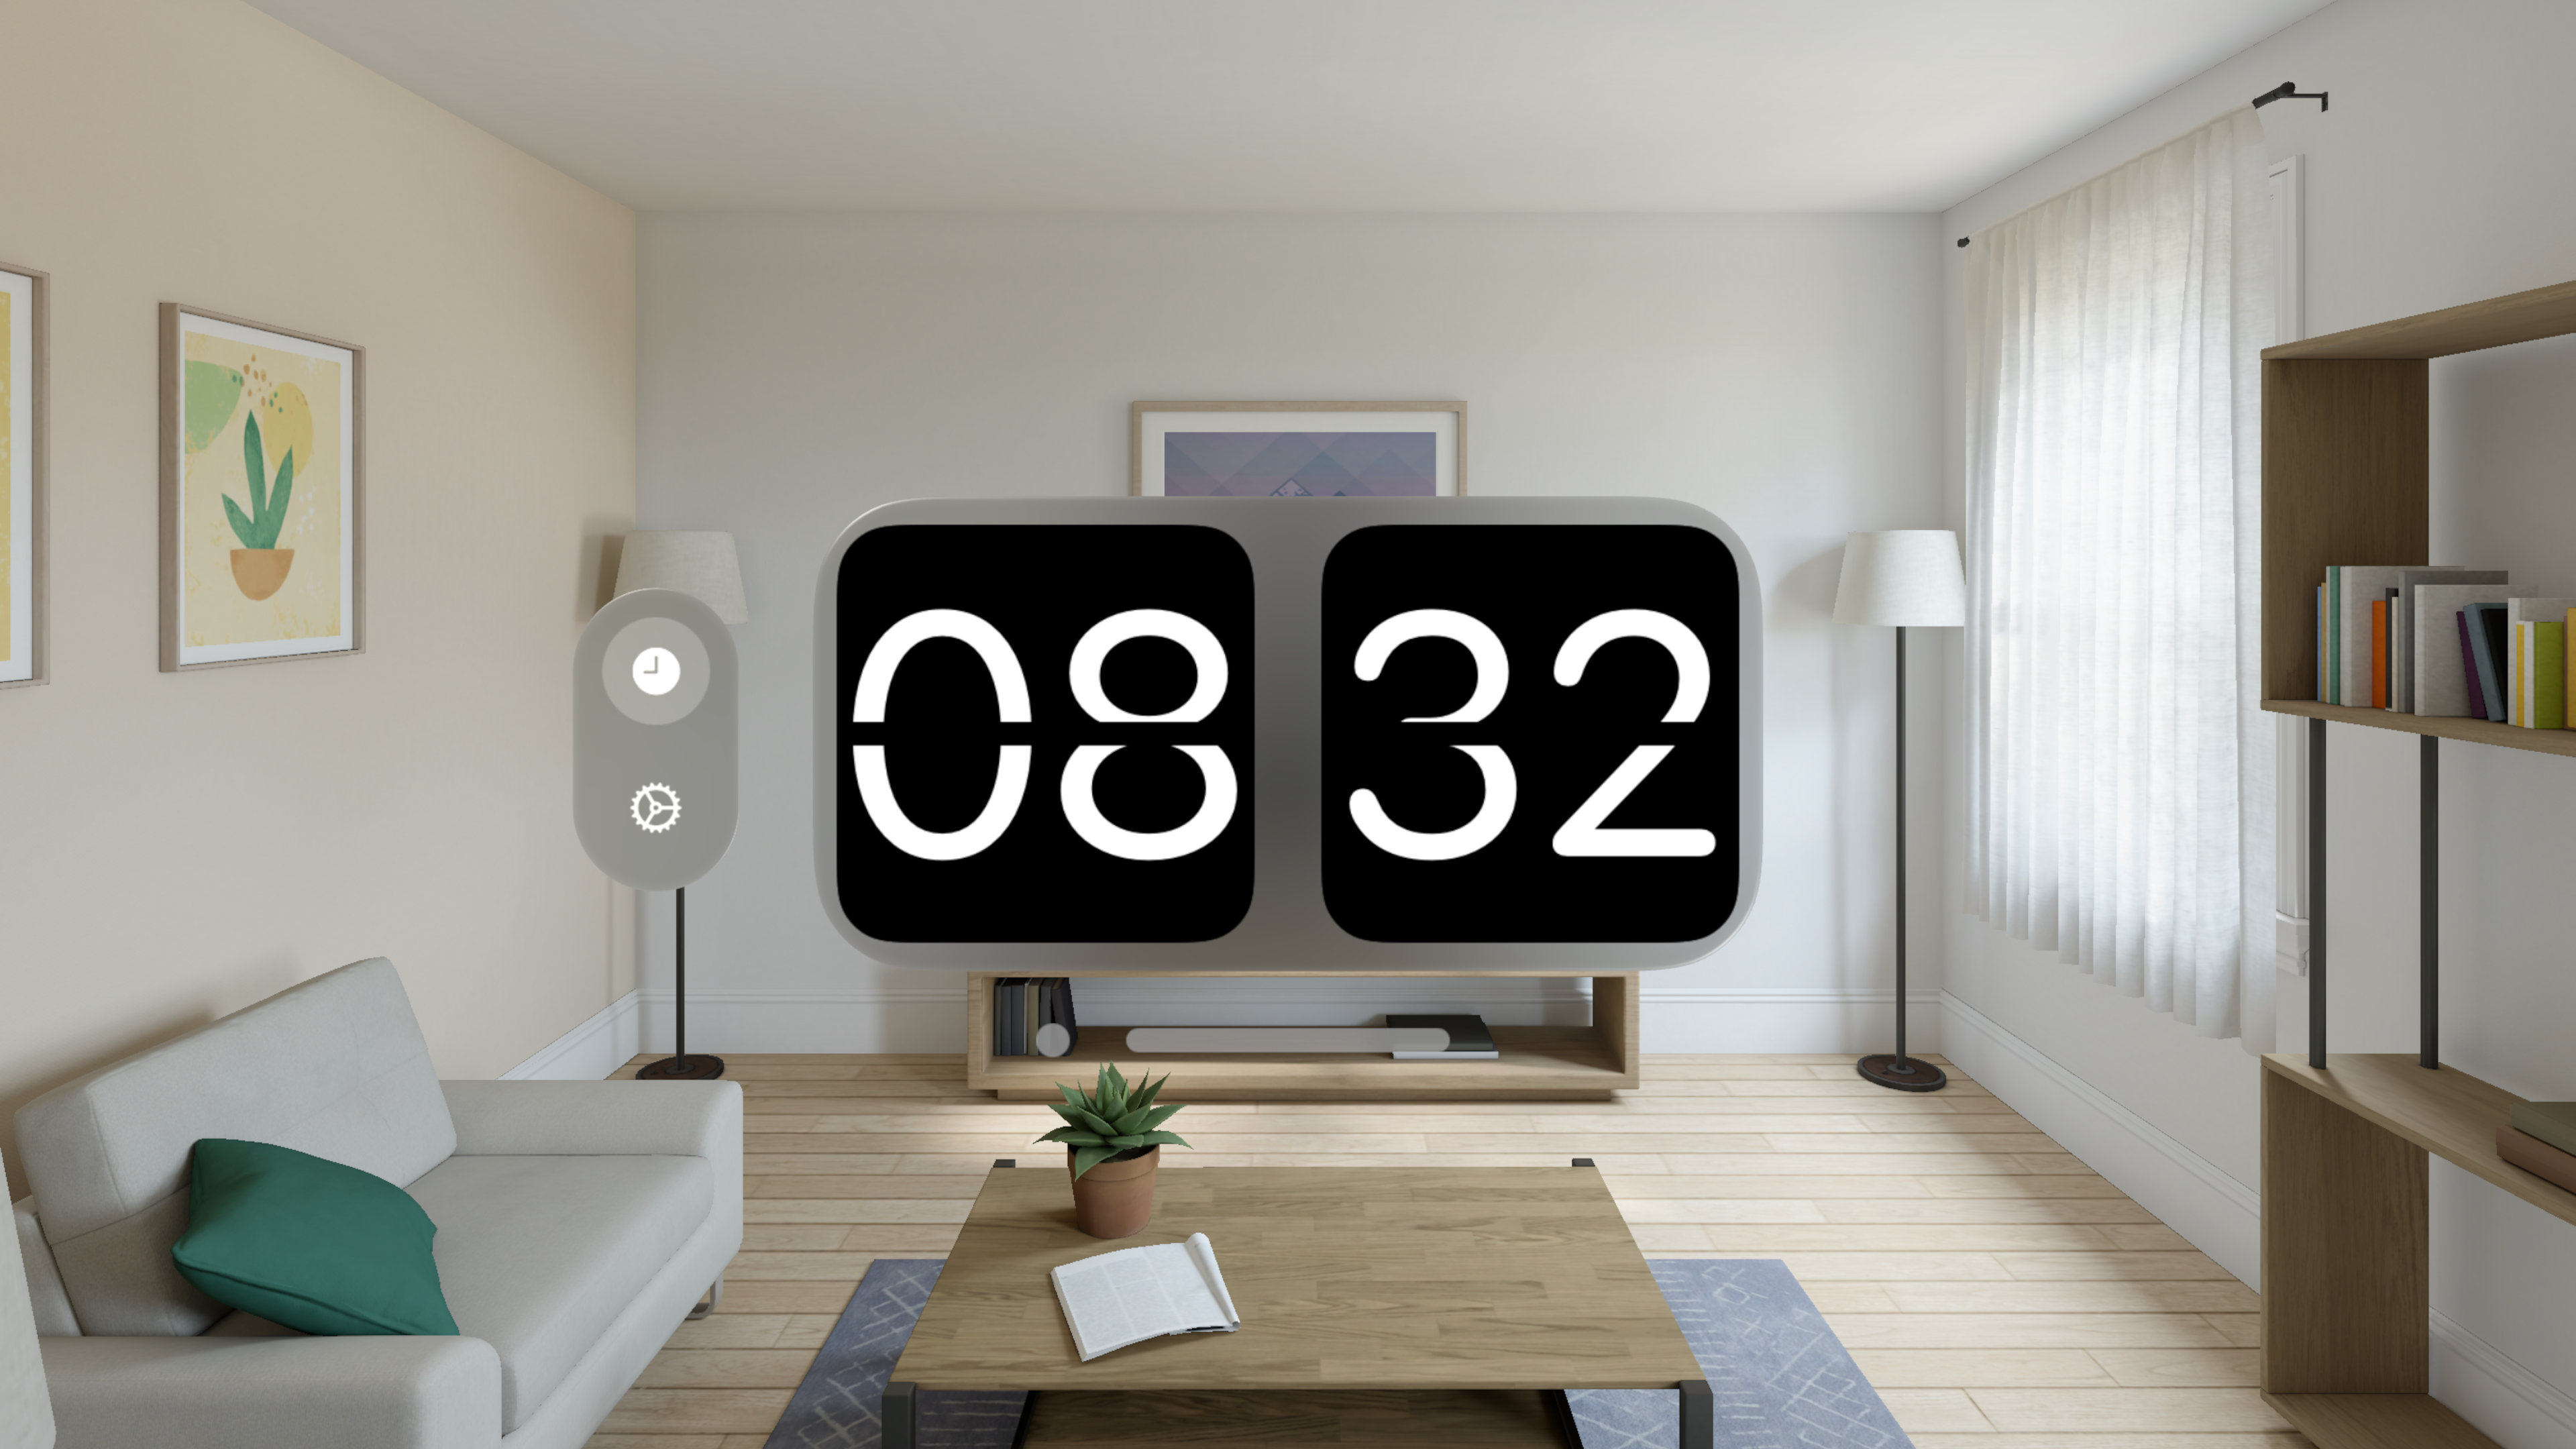 &ldquo;A VisualOS spatial window with a flip clock showing 8 32 AM.&rdquo;